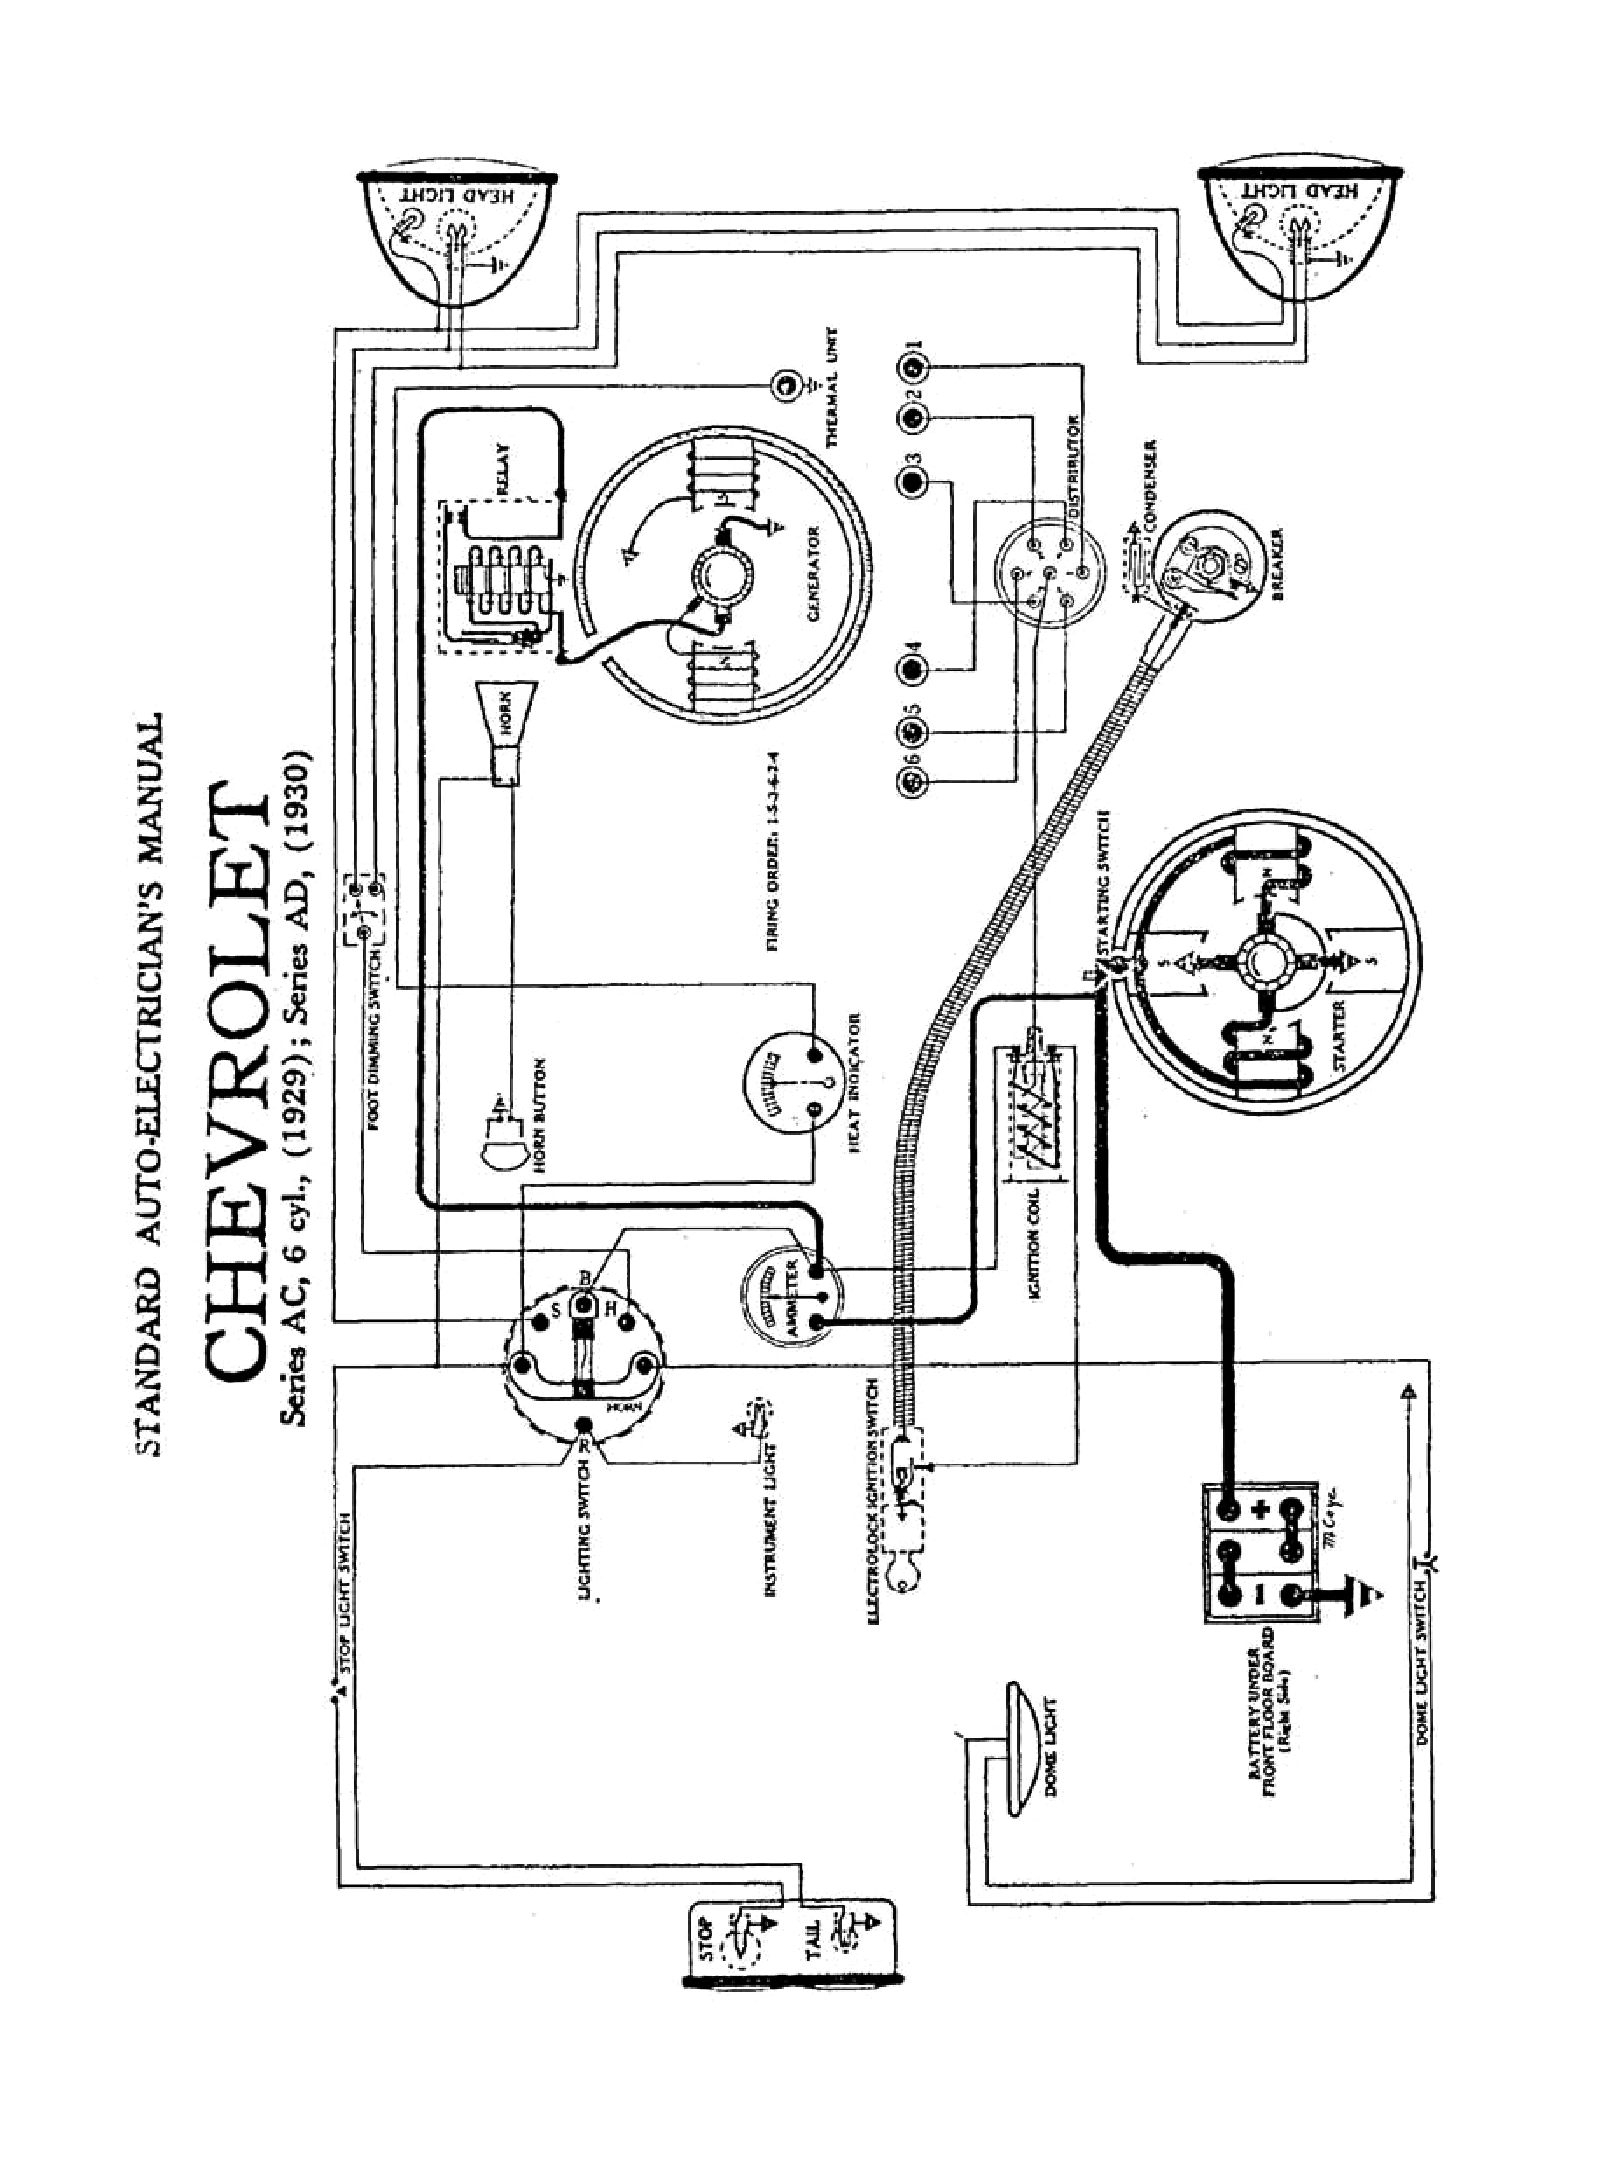 1928 Pontiac Wiring Harness - Wiring Diagrams Hubs - Model A Ford Wiring Diagram